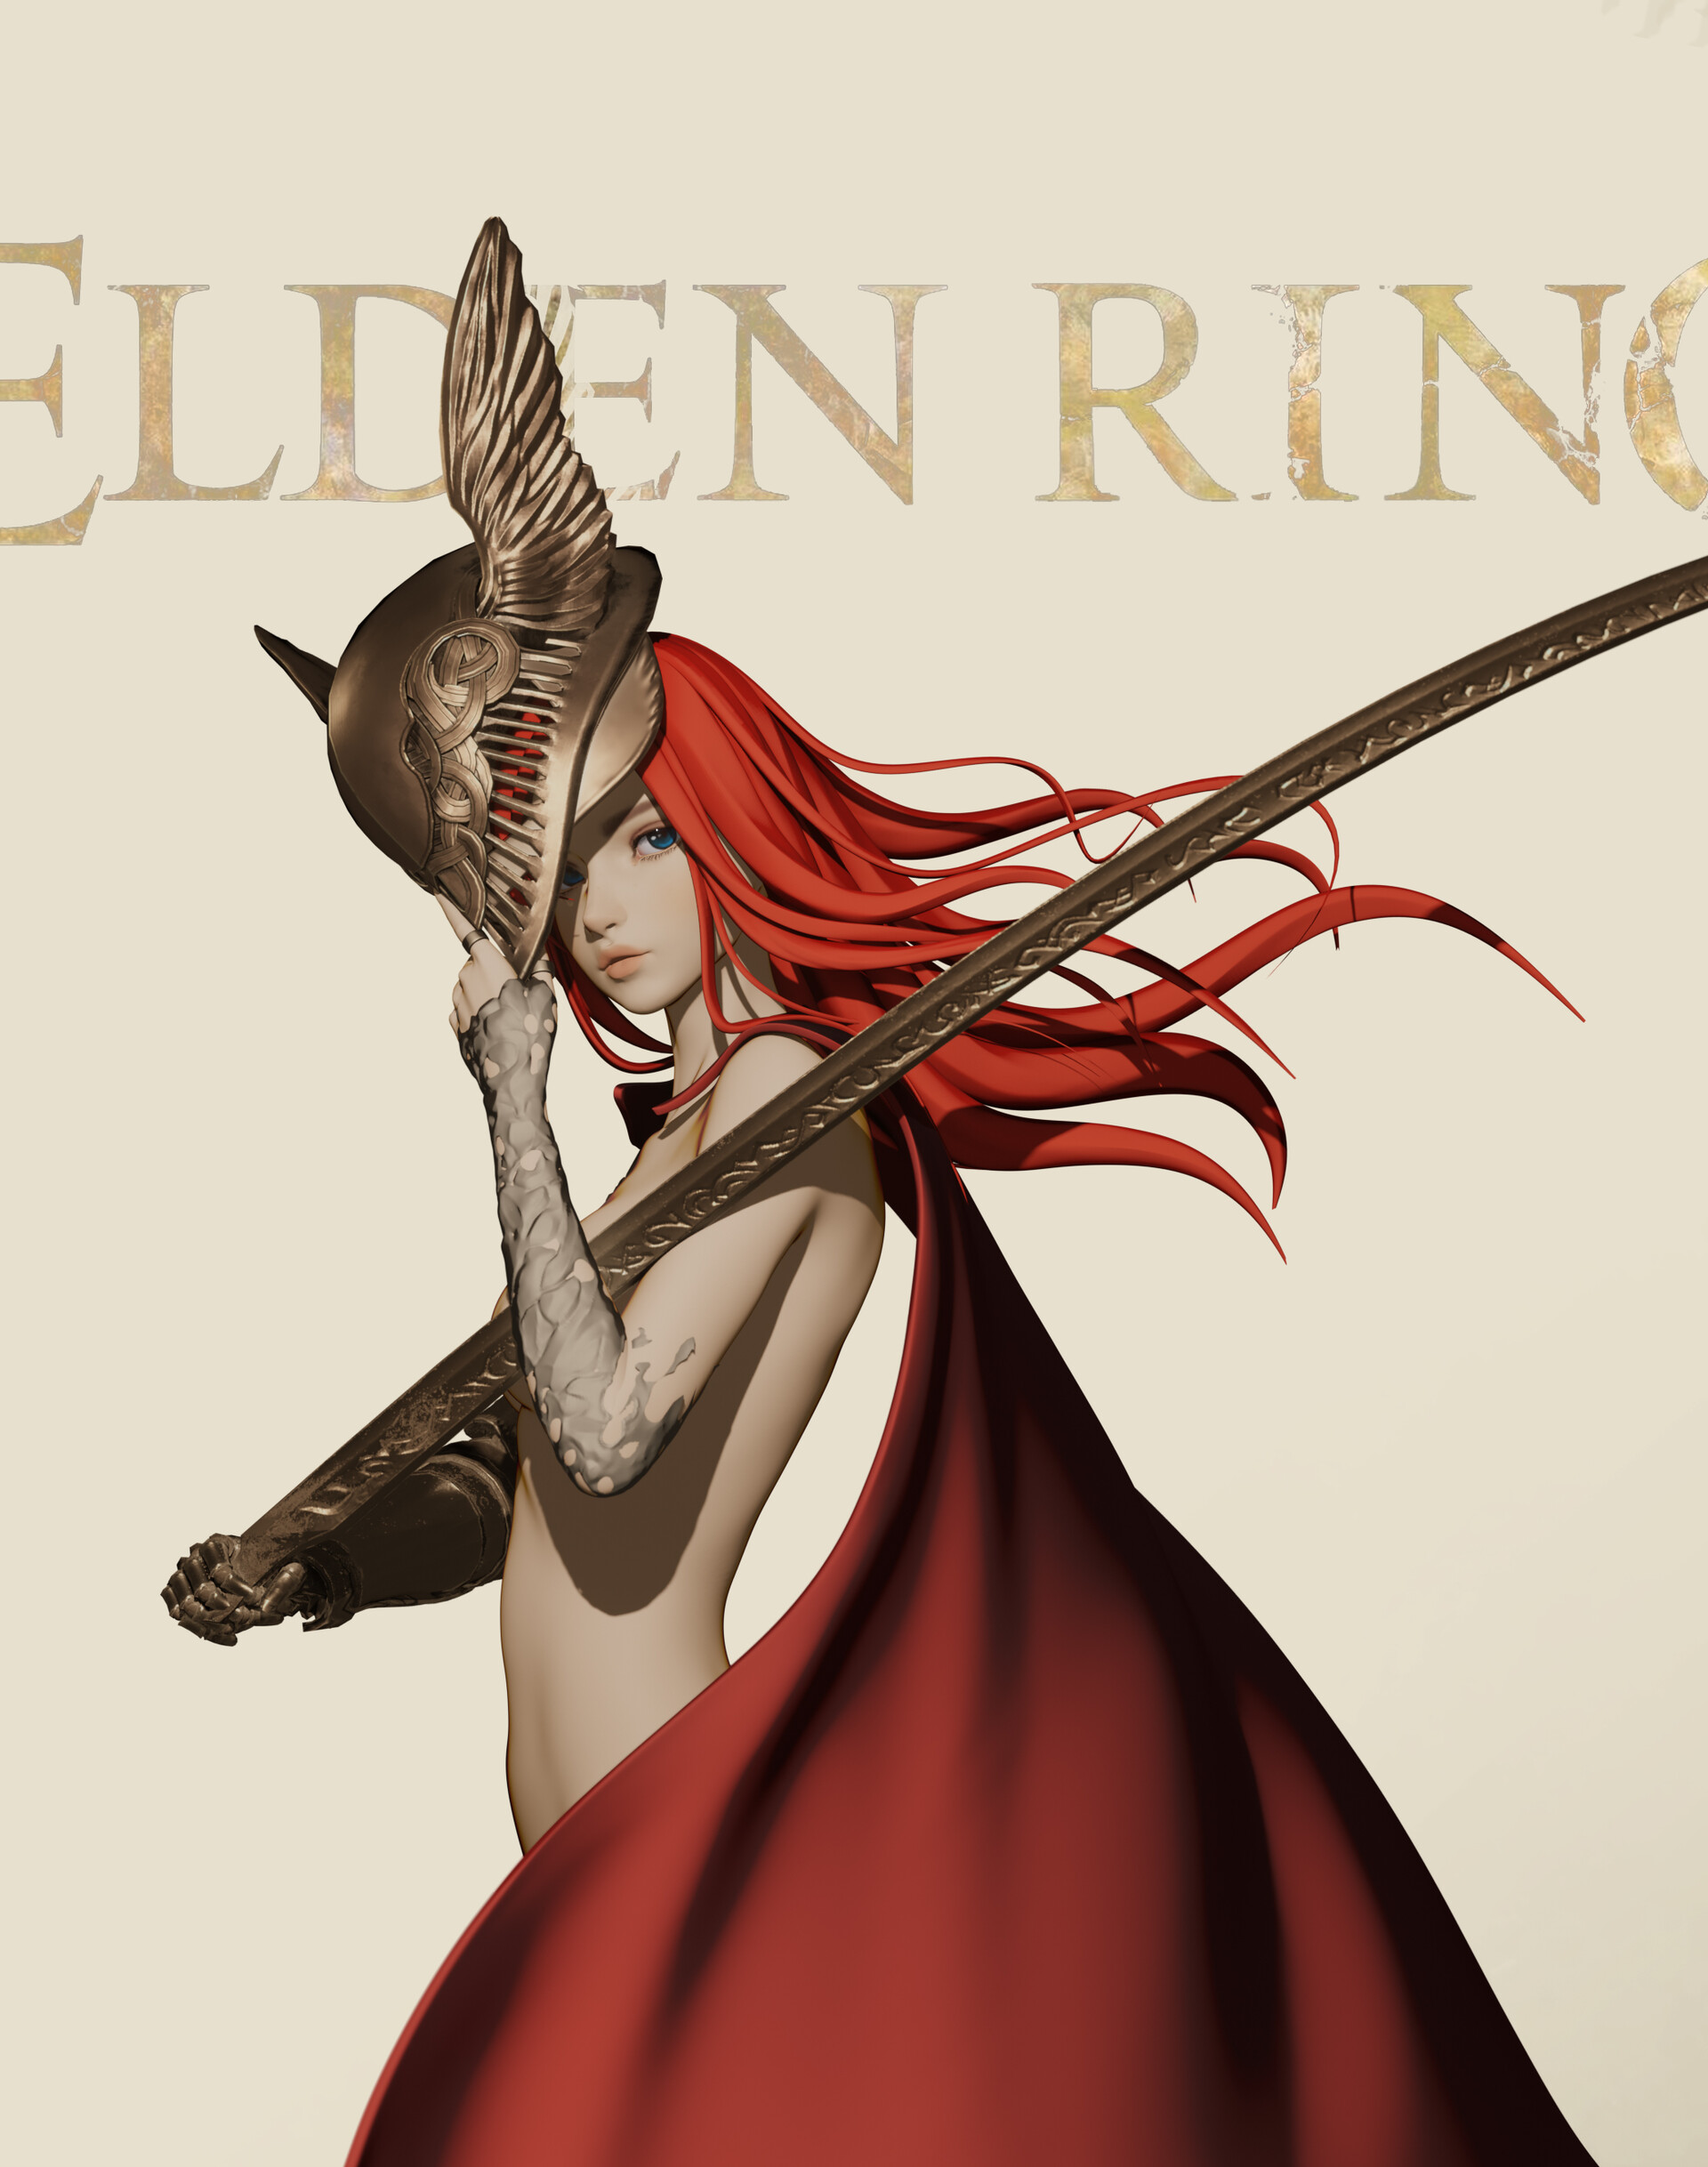 Malenia Elden Ring Malenia Blade of Miquella // Elder Ring 